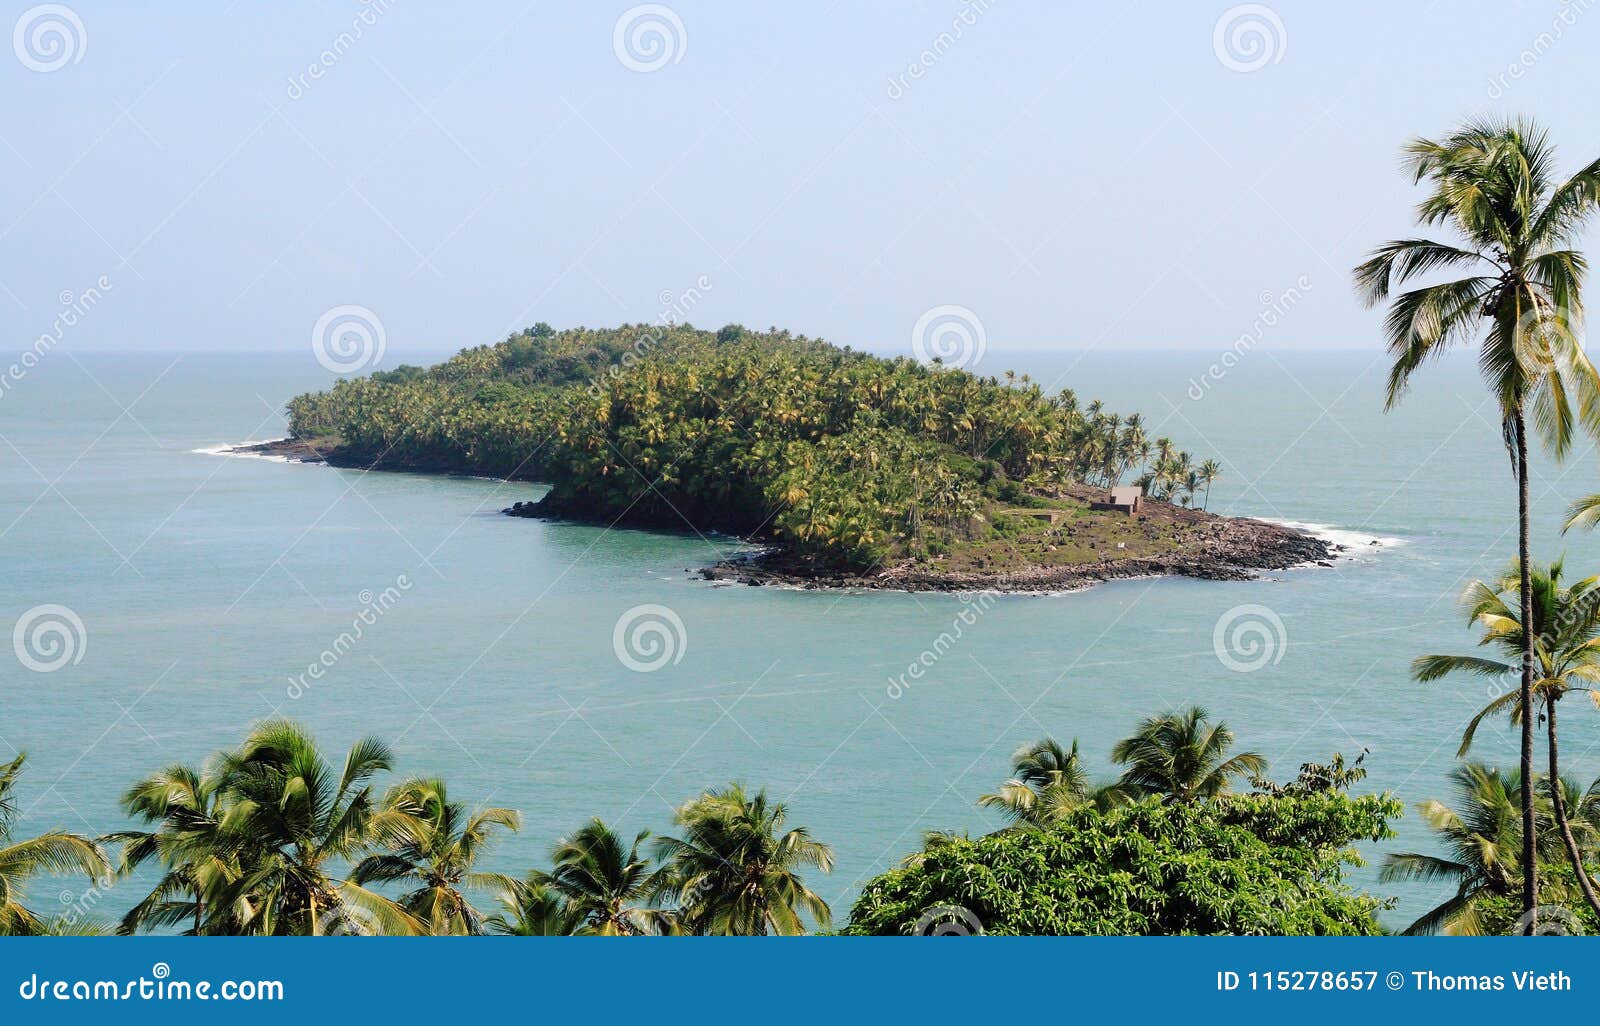 french guiana, iles du salut - islands of salvation: devils island with dreyfus hut